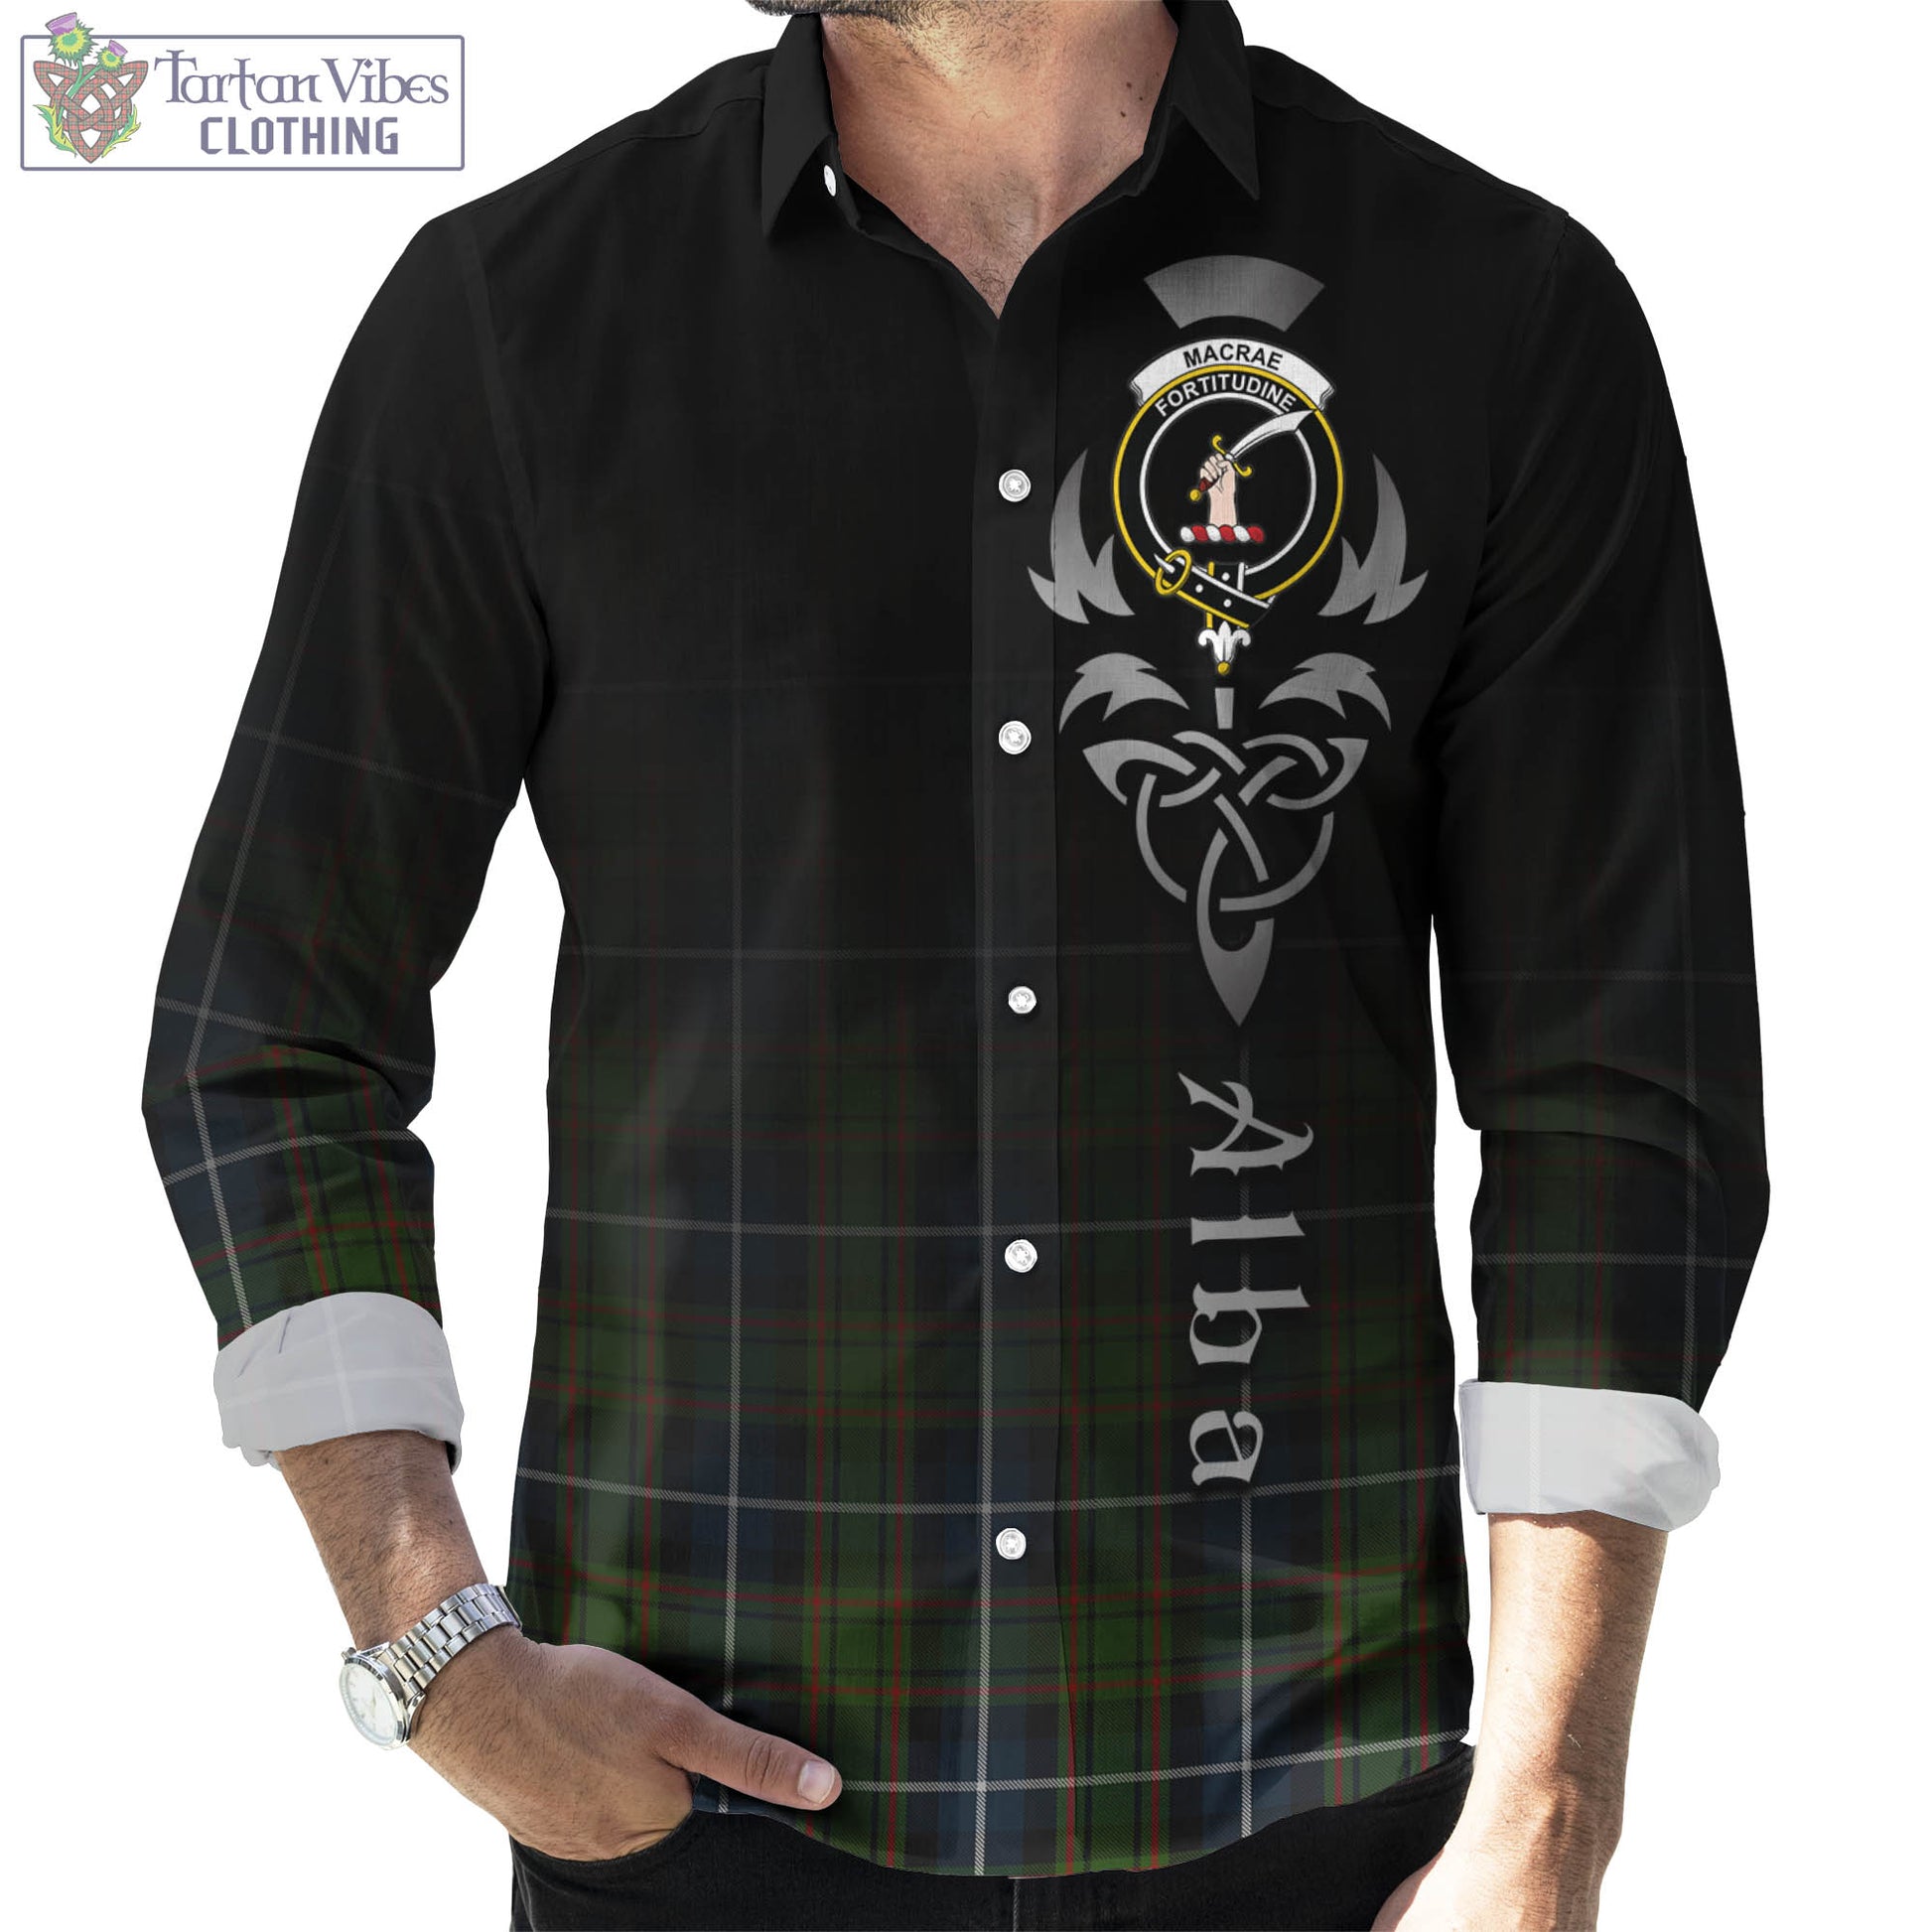 Tartan Vibes Clothing MacRae Hunting Tartan Long Sleeve Button Up Featuring Alba Gu Brath Family Crest Celtic Inspired